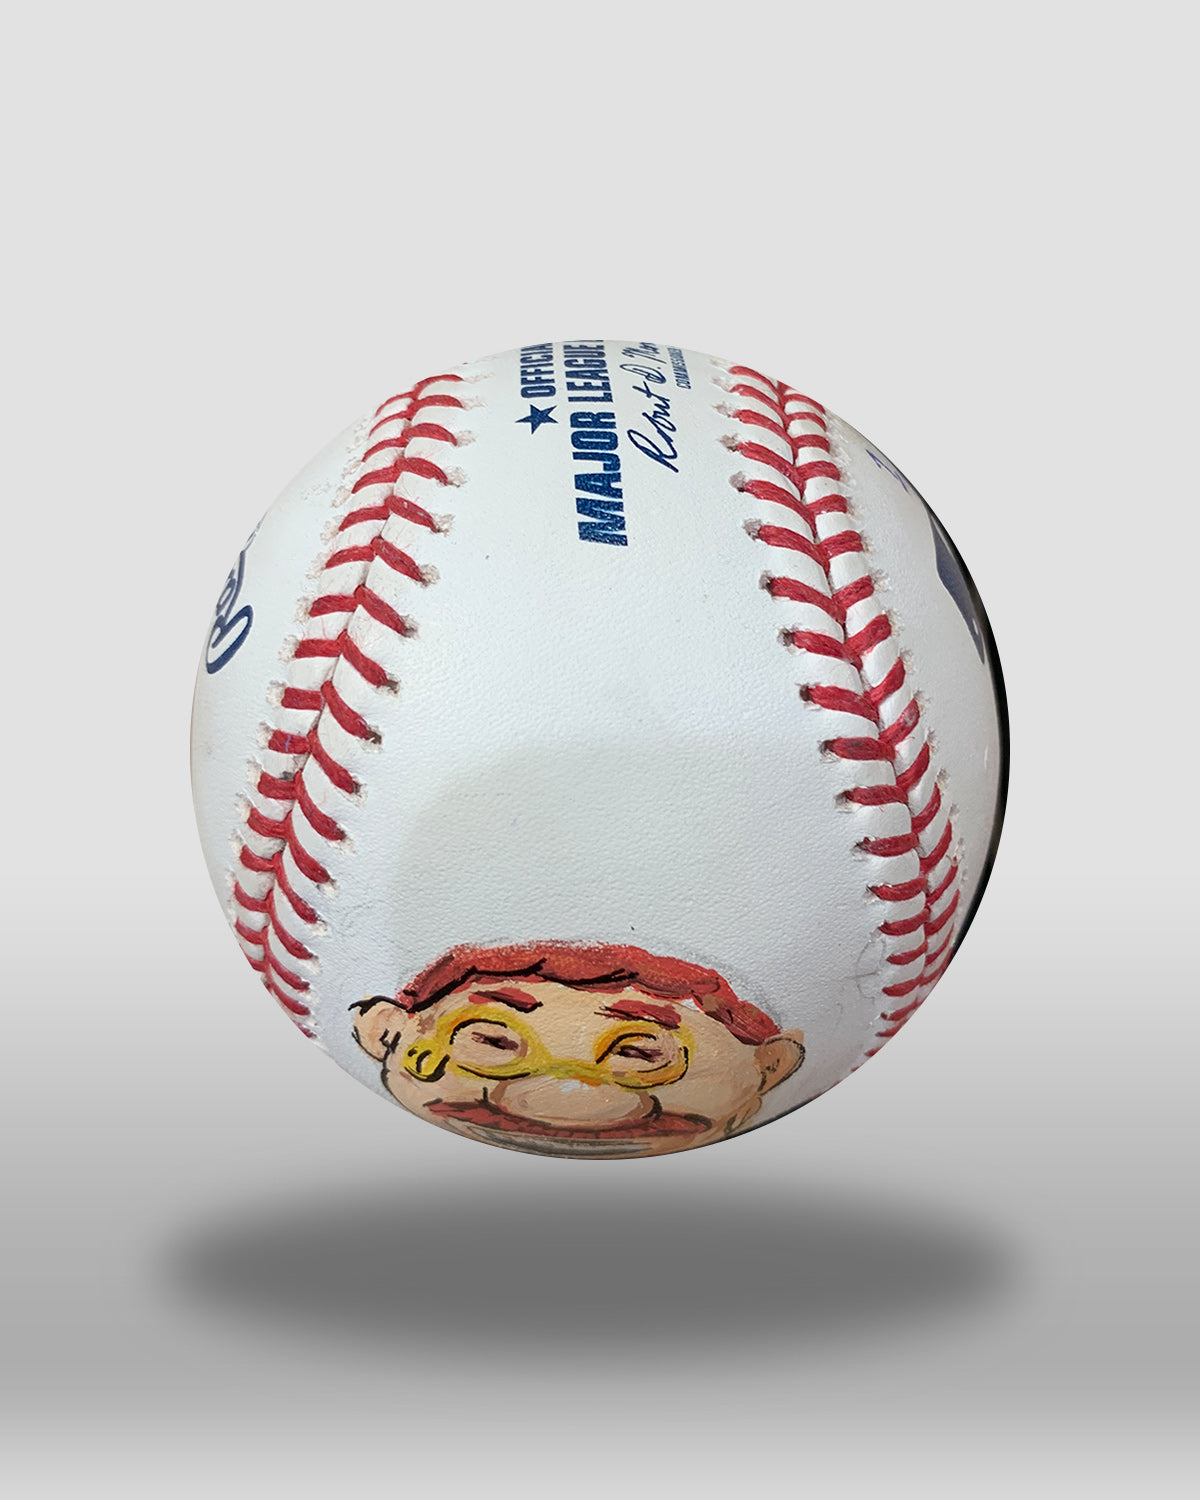 Teddy Hand-Painted Baseball Art